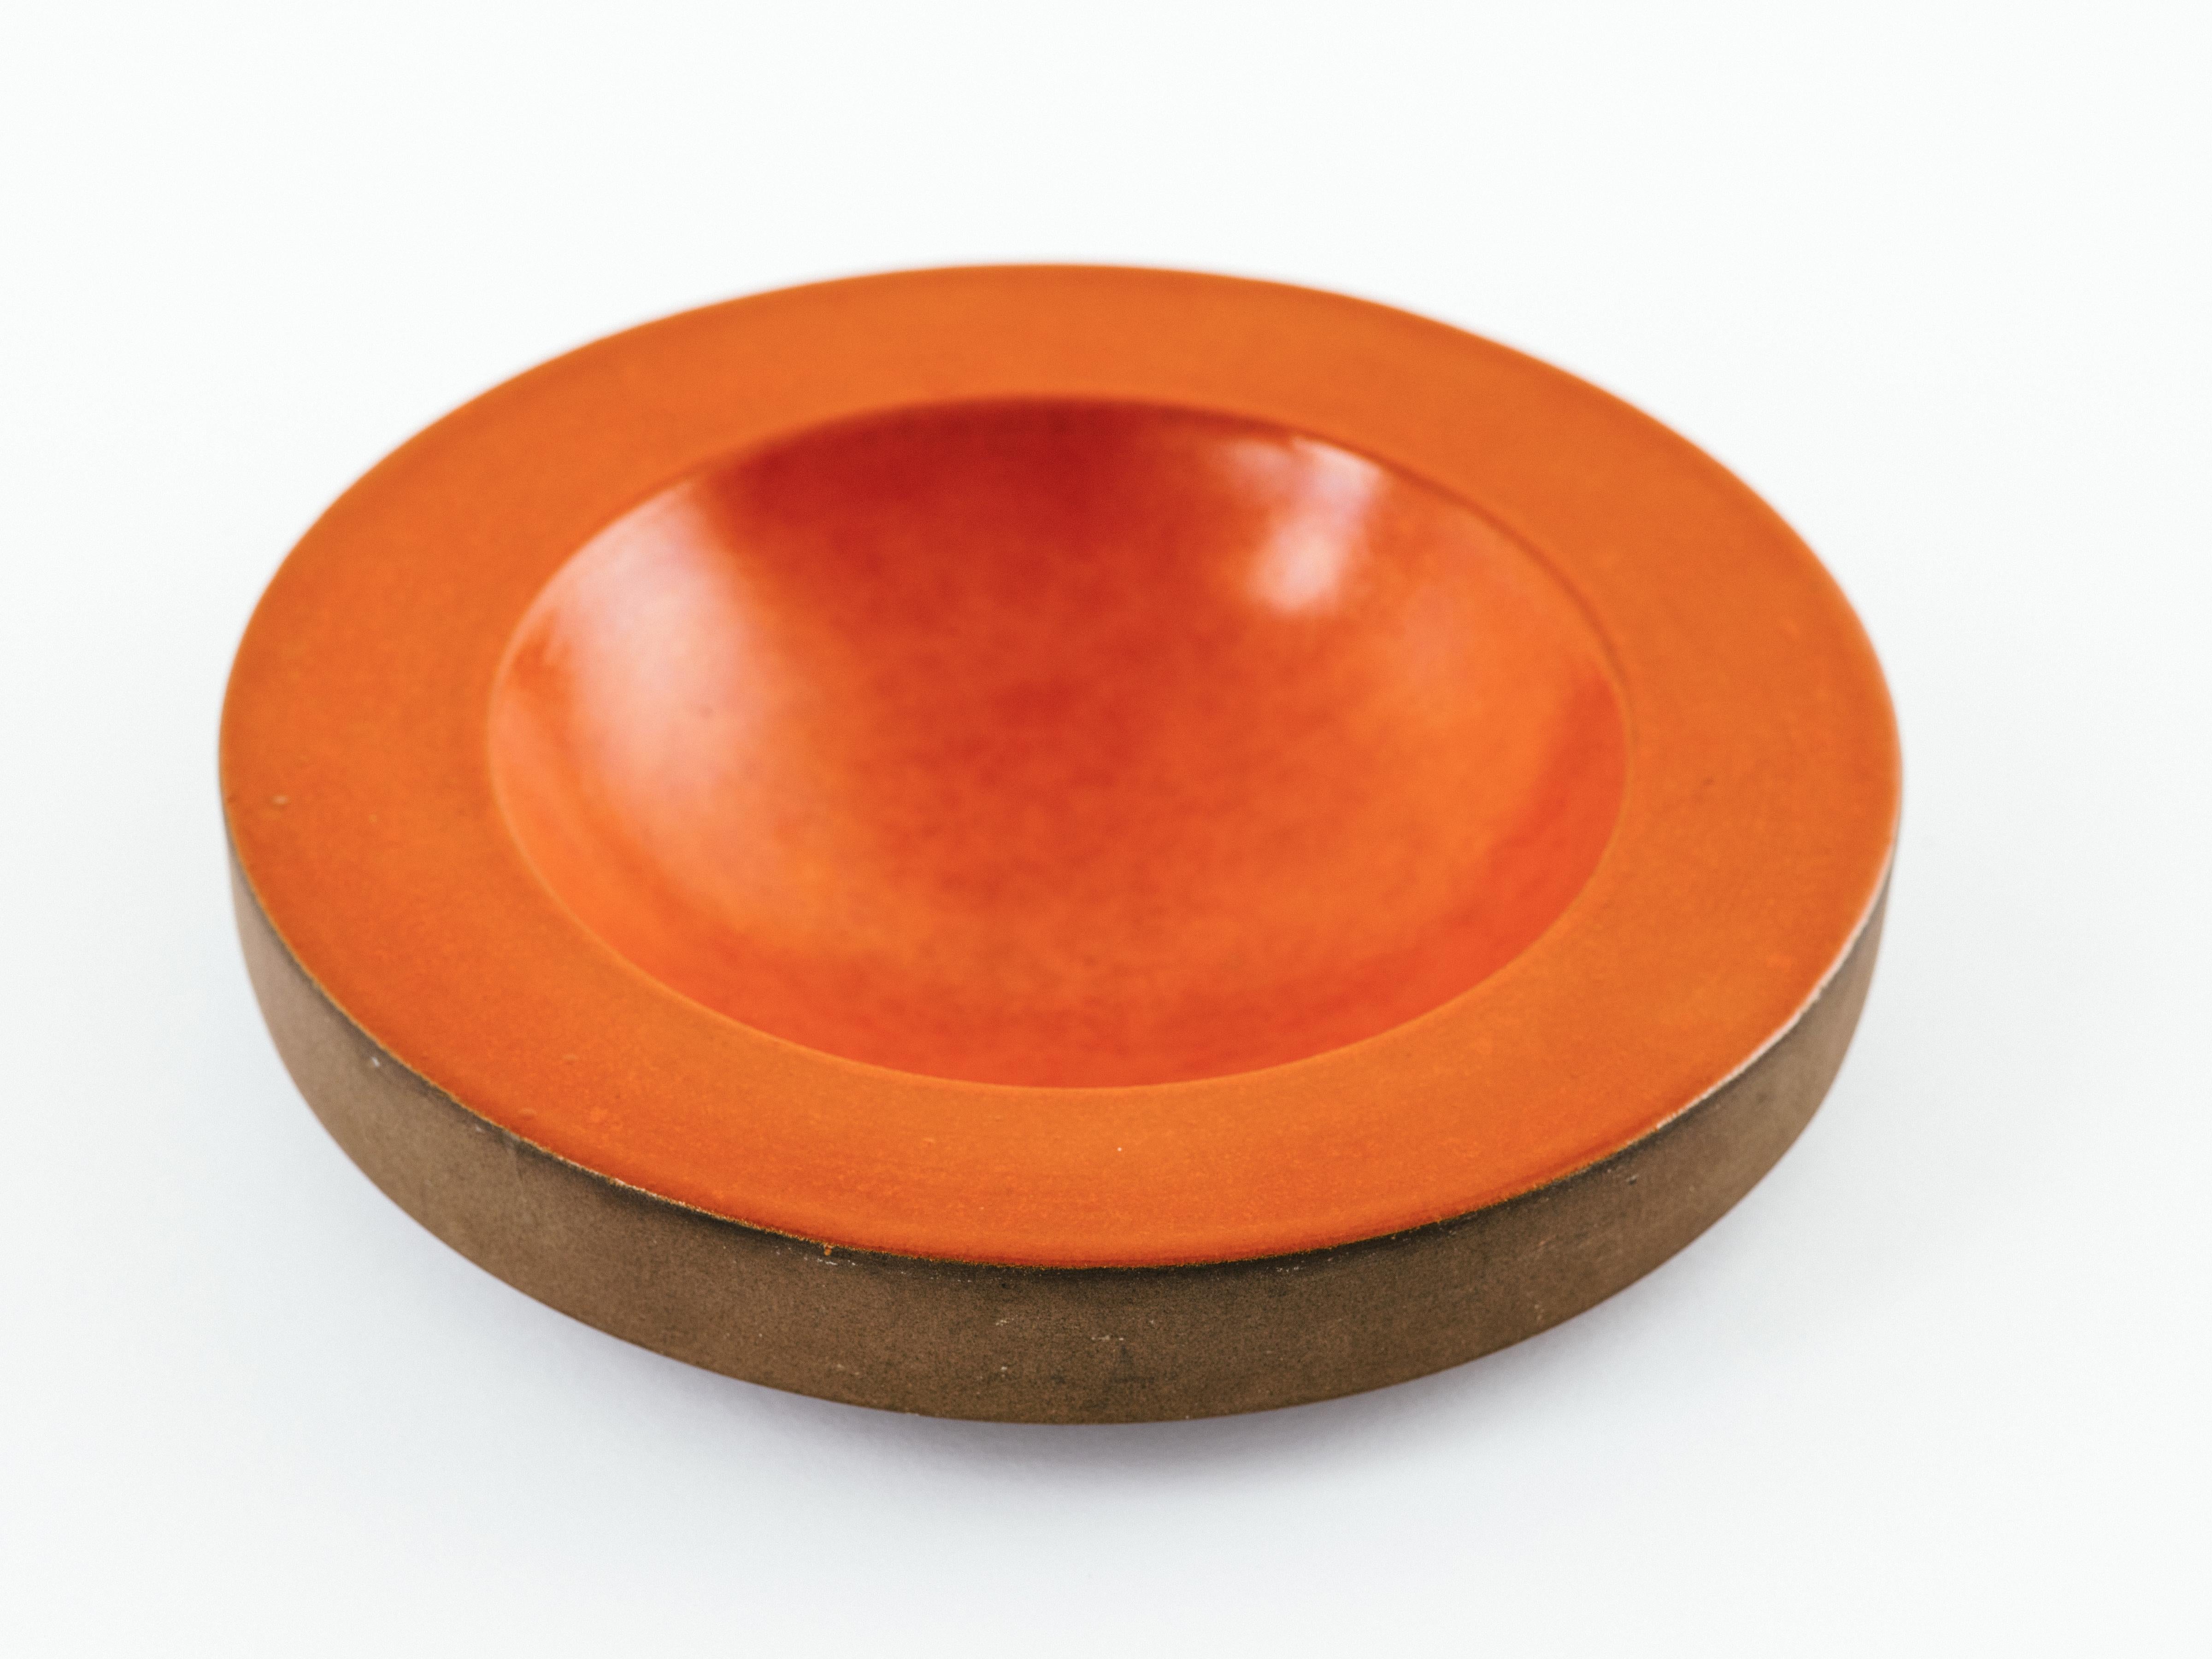 American Design Technics Floating Low Ceramic Bowl in Blood Orange Glaze, 1960s